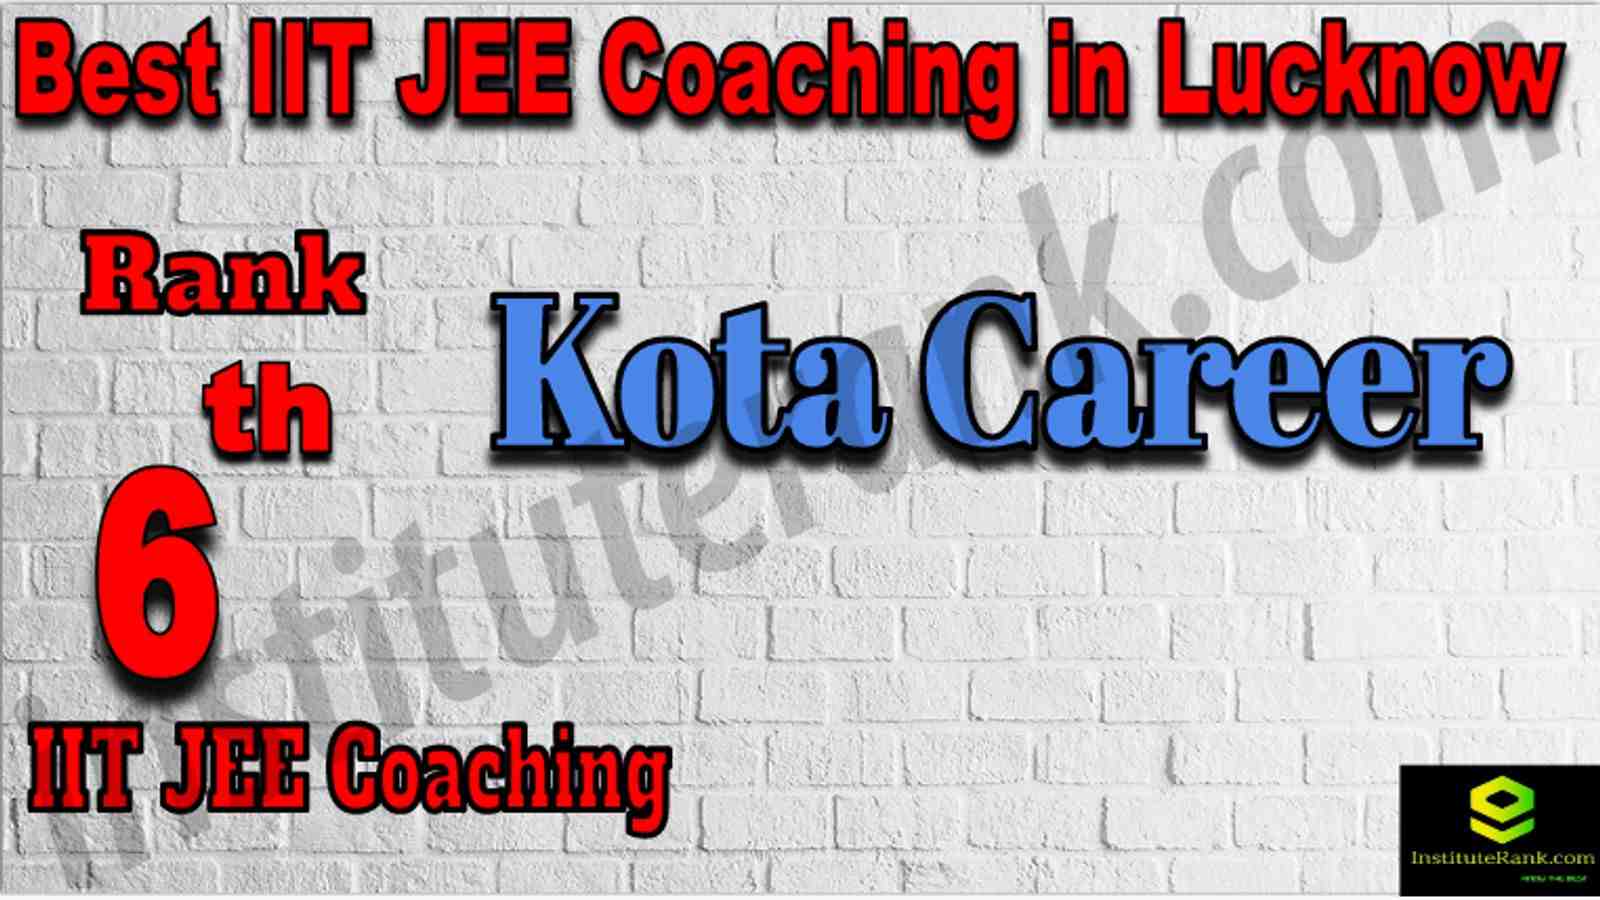 Rank 6th Best IIT JEE Coaching in Lucknow